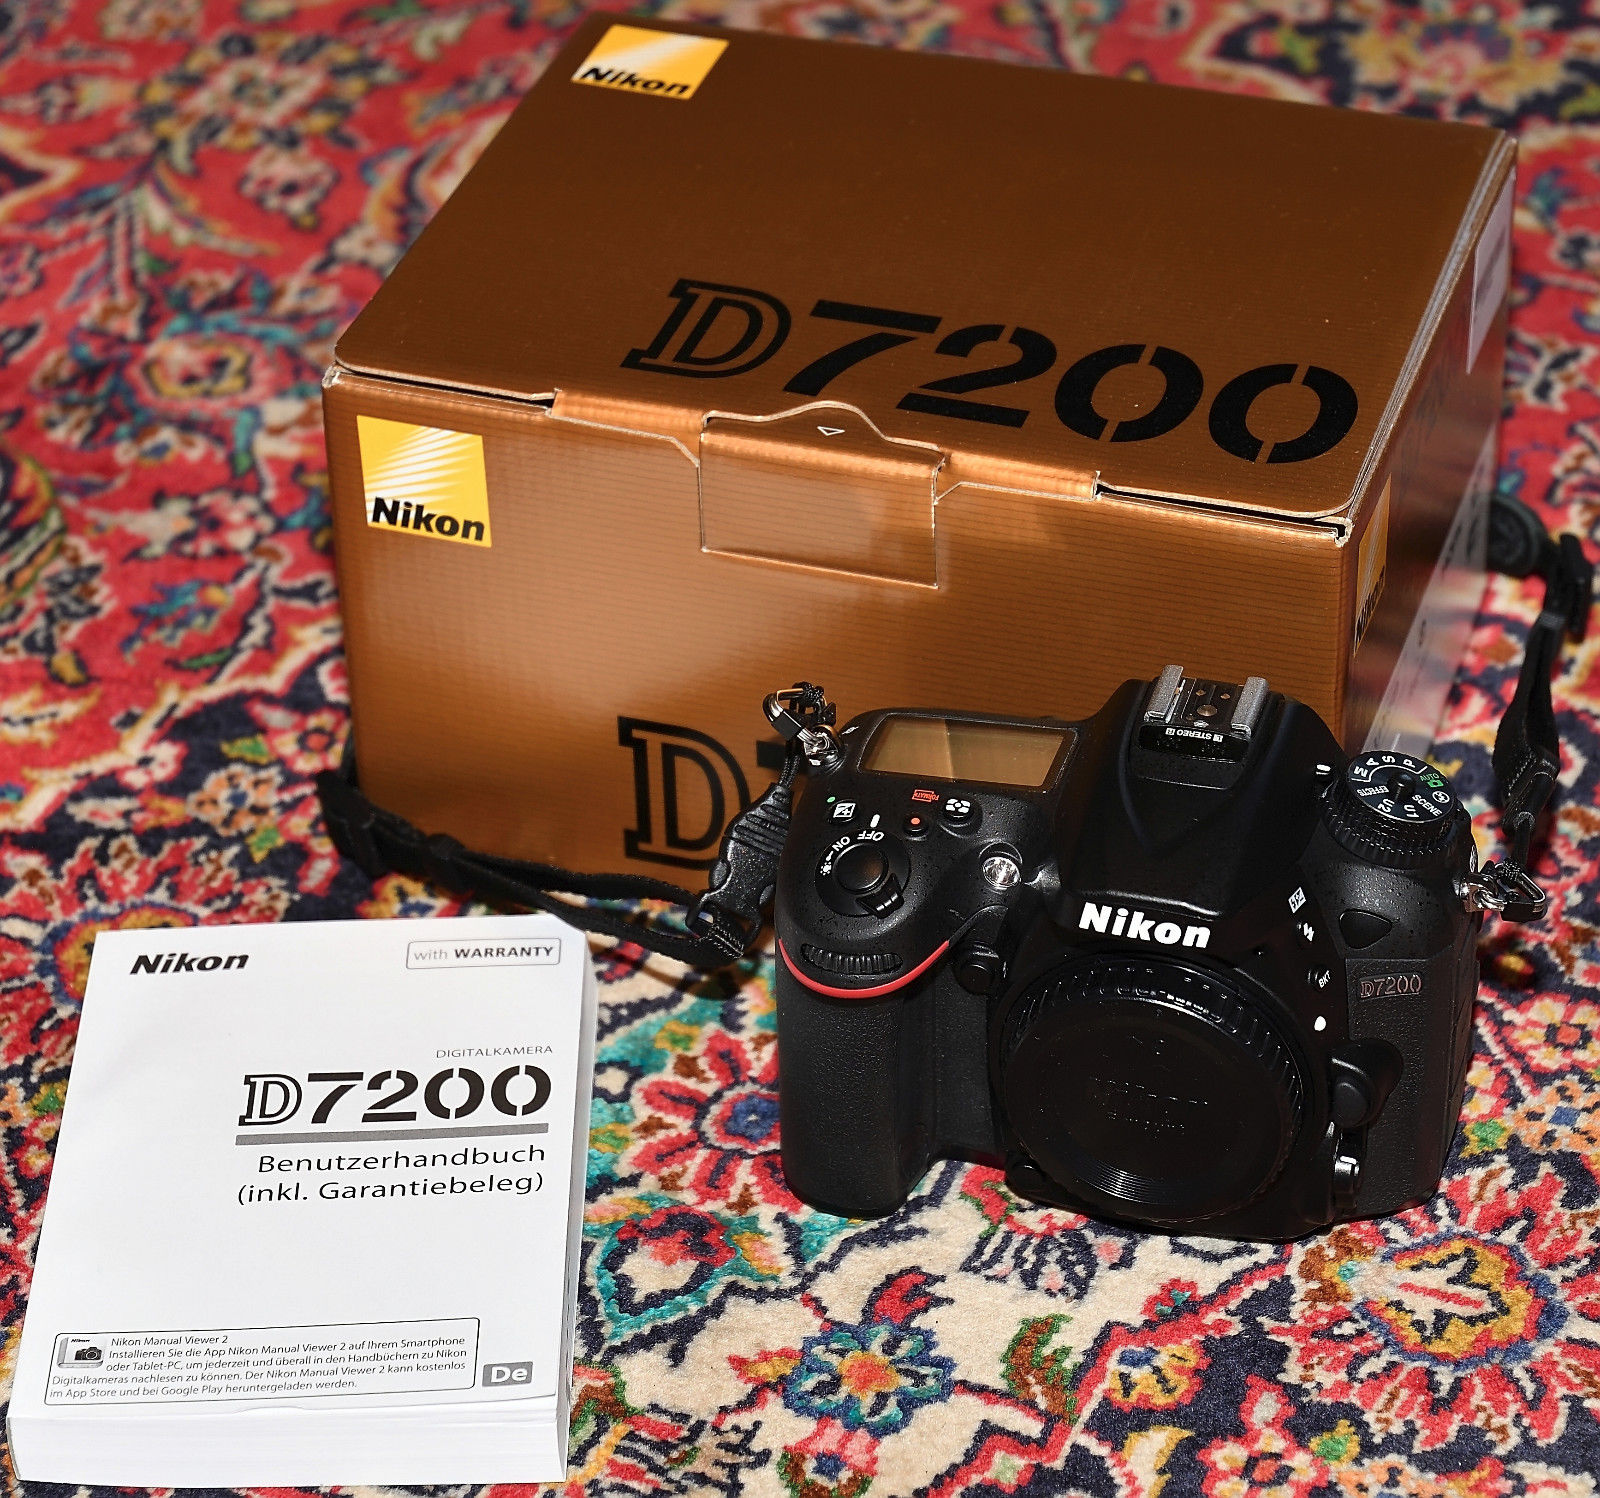 Nikon D D7200 24.2 MP SLR-Digitalkamera - Schwarz (Nur Gehäuse).